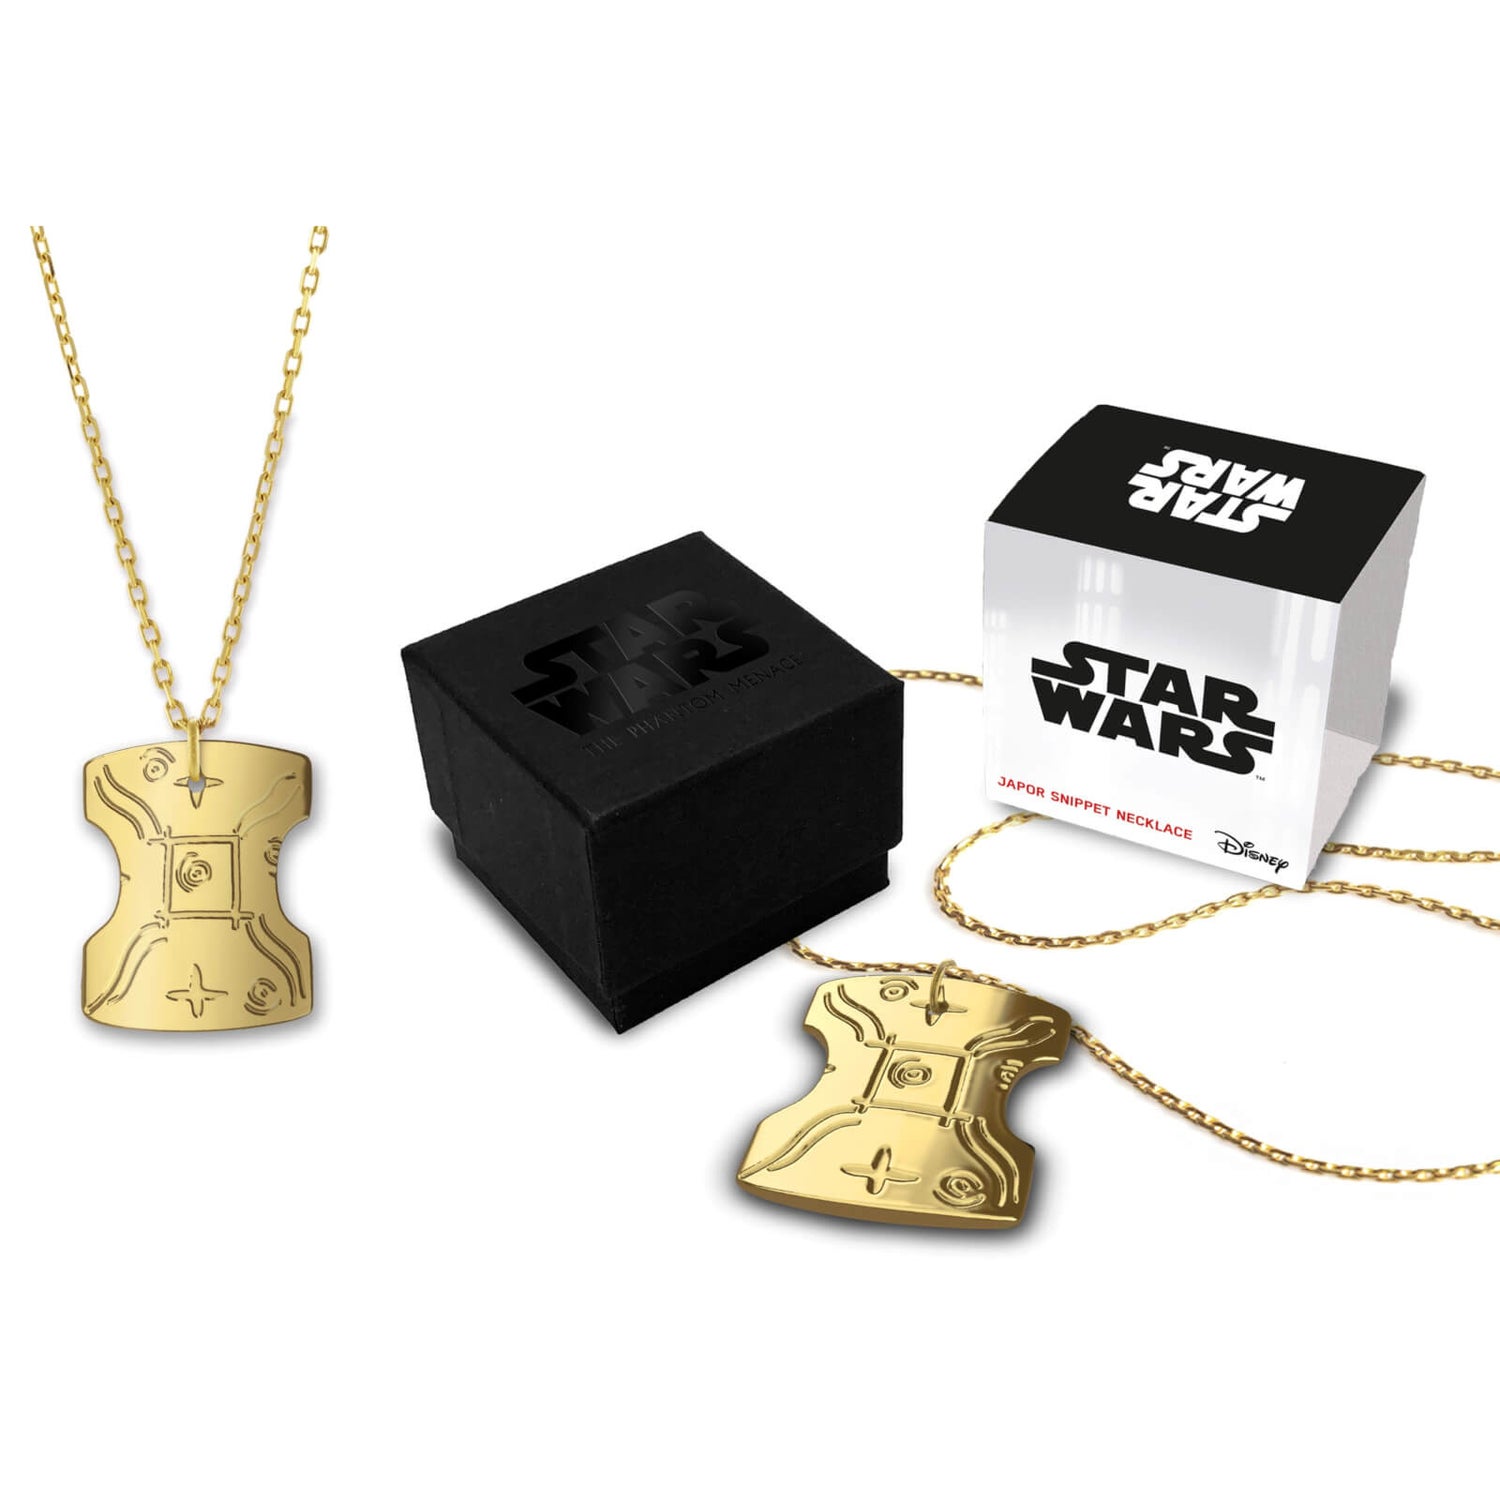 Star Wars Japor Snippet Necklace | Collectible Star Wars Jewelry Pendant -  Noszvaj 981 Vendégház